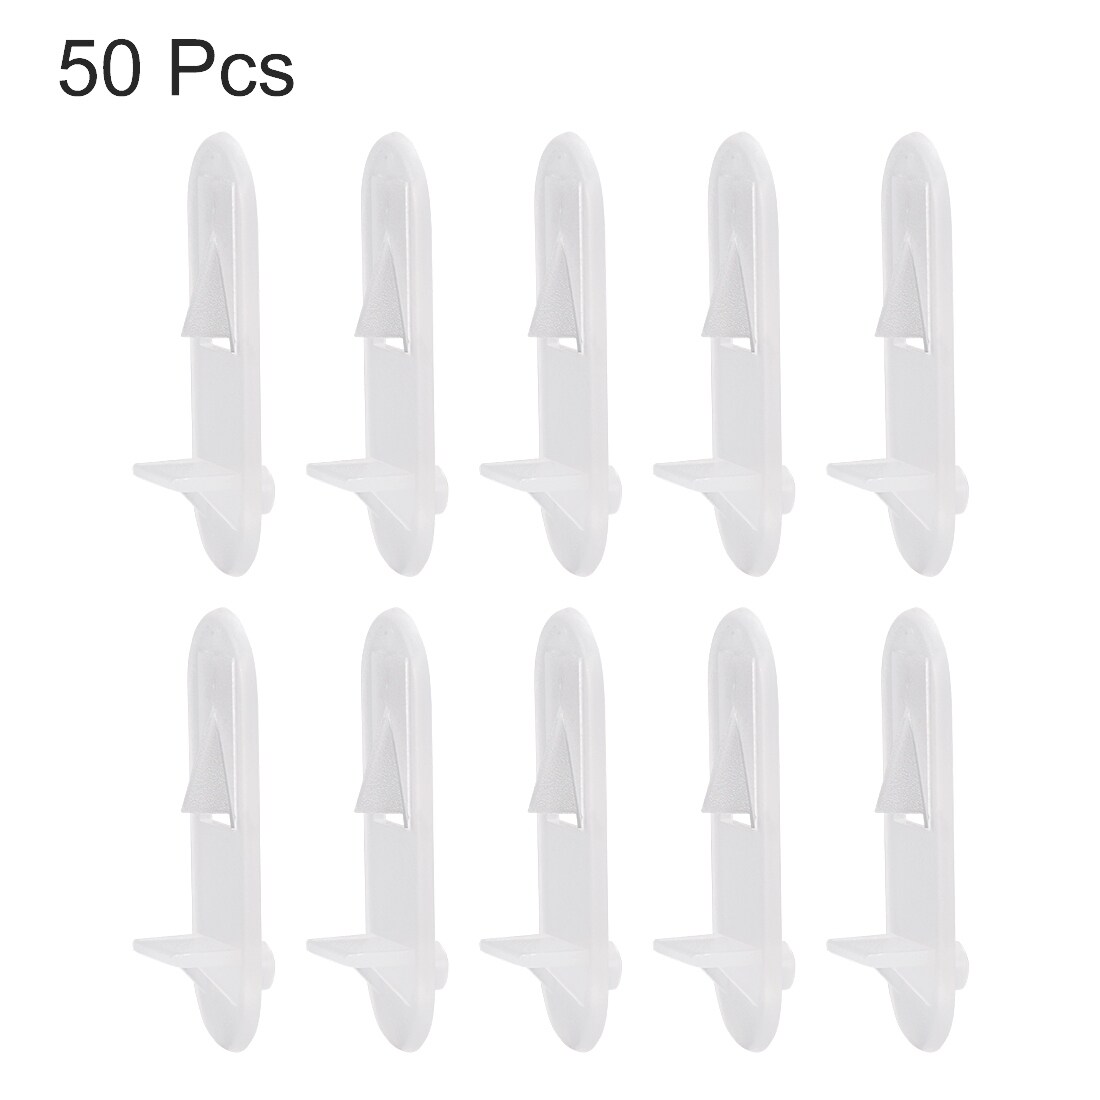 Plastic Shelf Support Pegs,7mm Shelf -Locking,Cabinet Bracket Peg,Clear,50pcs - Clear - 7 x 6mm,50pcs